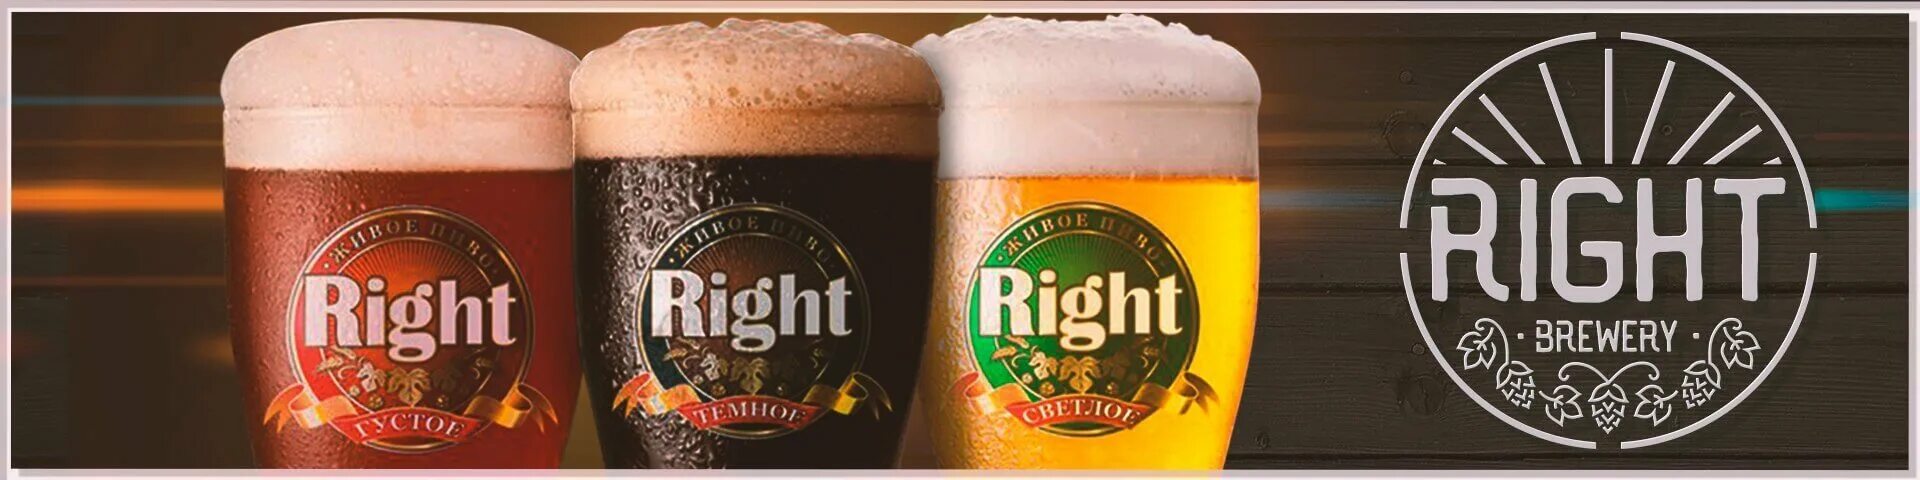 Пиво купить тольятти. Пиво right. Севастопольское пиво. Theakston Brewery пивоварня. Пиво «right темное».